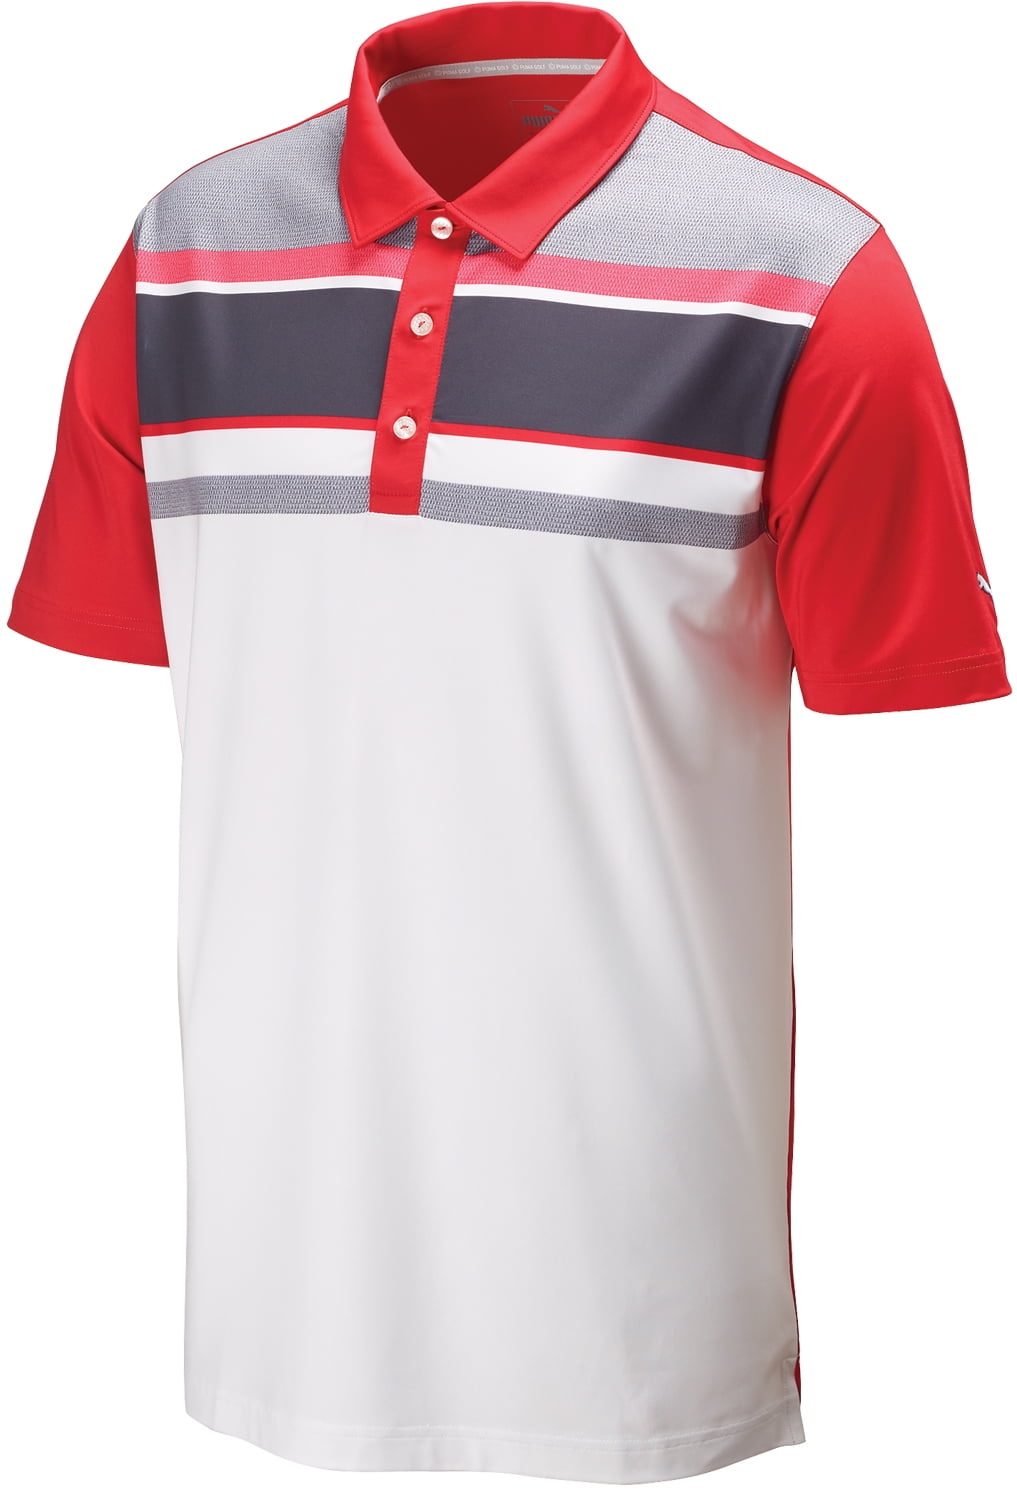 puma golf polo shirt sale